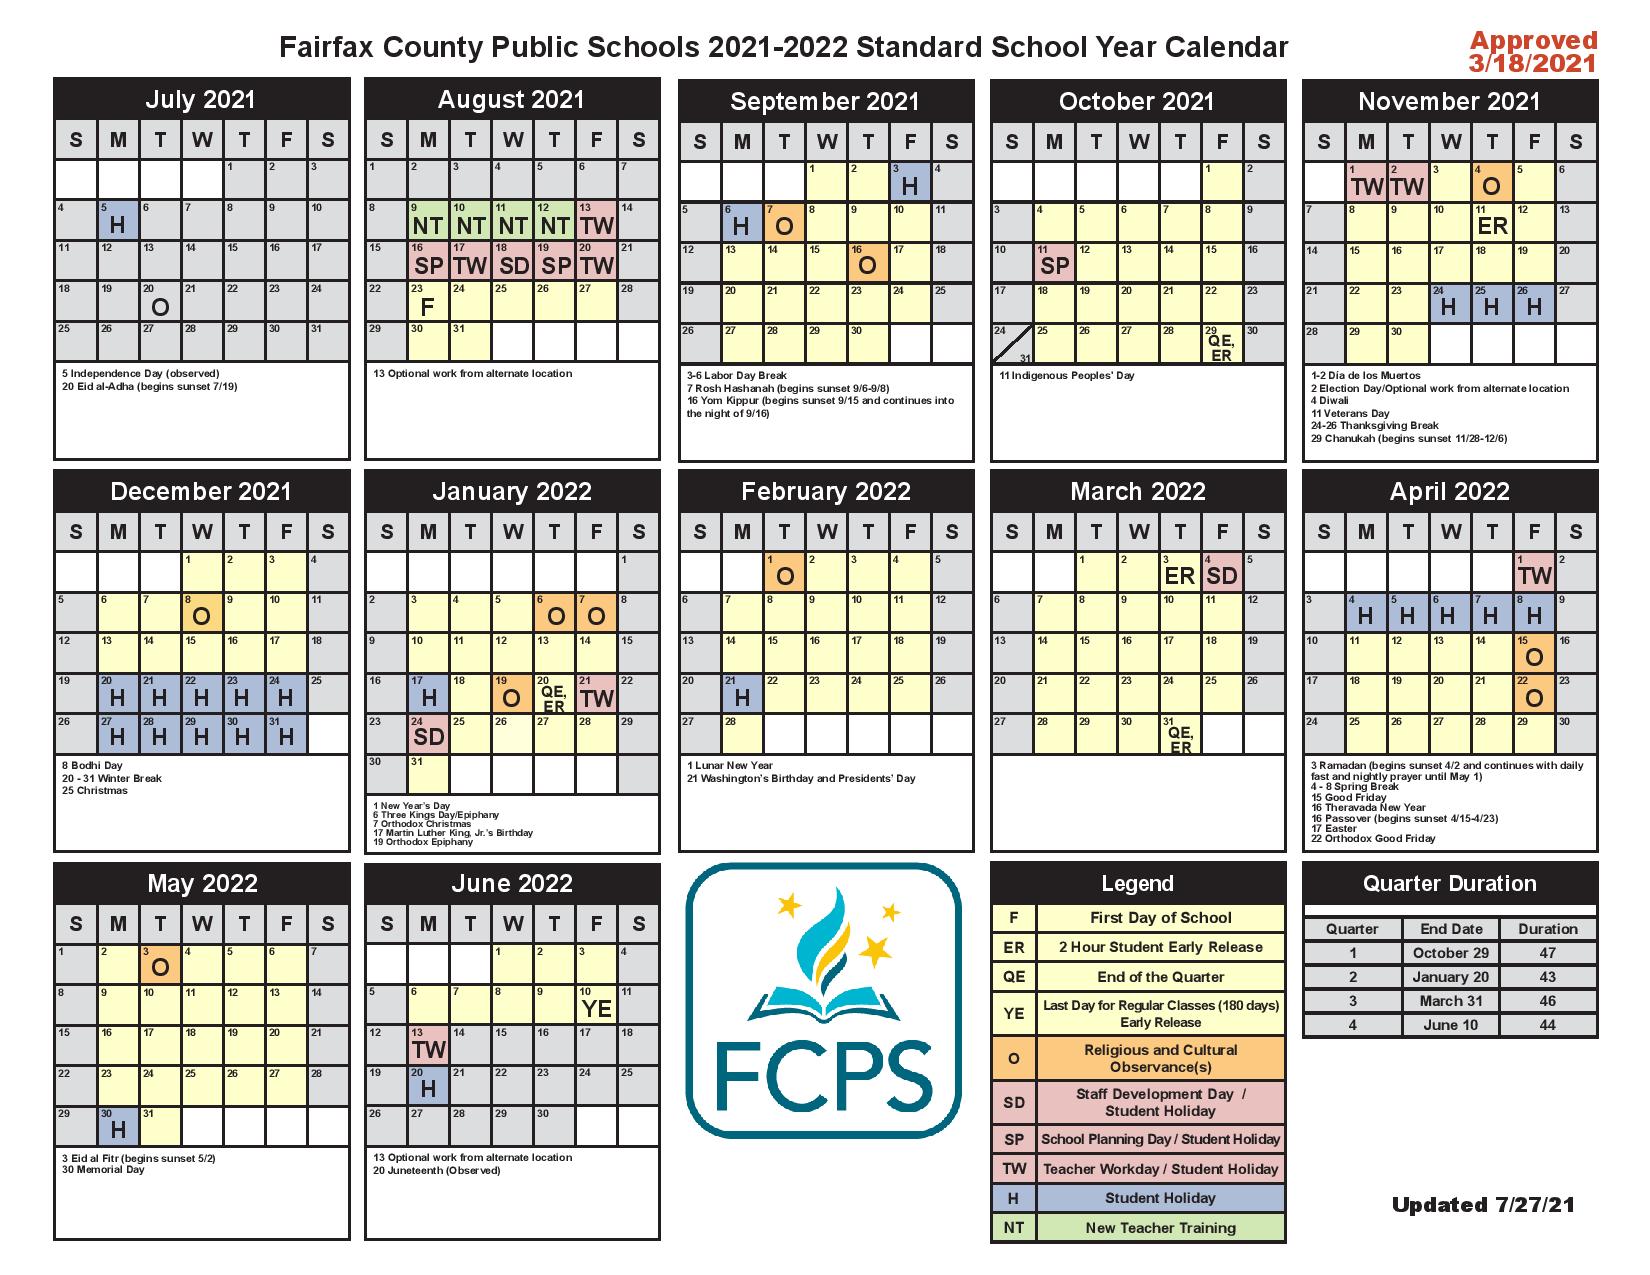 Fairfax County Public Schools Calendar 20212022 & Holidays